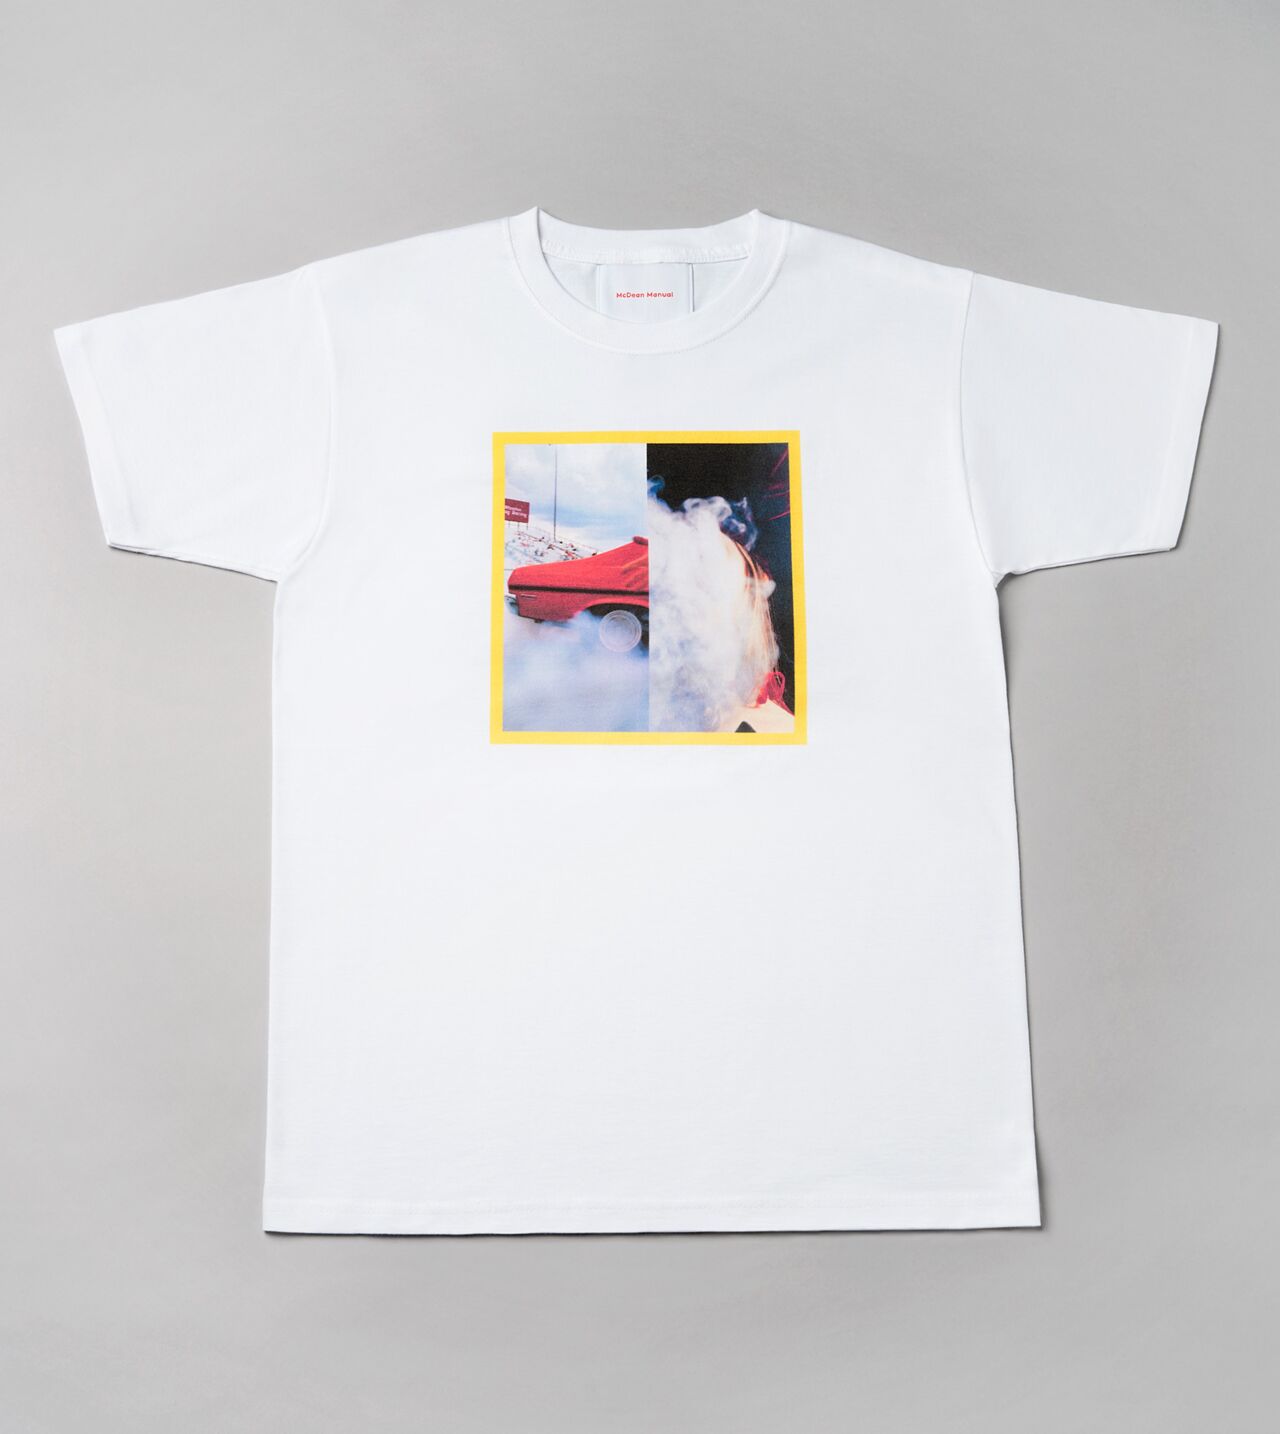 Byredo Craig McDean Tshirt Model Seoul M in White